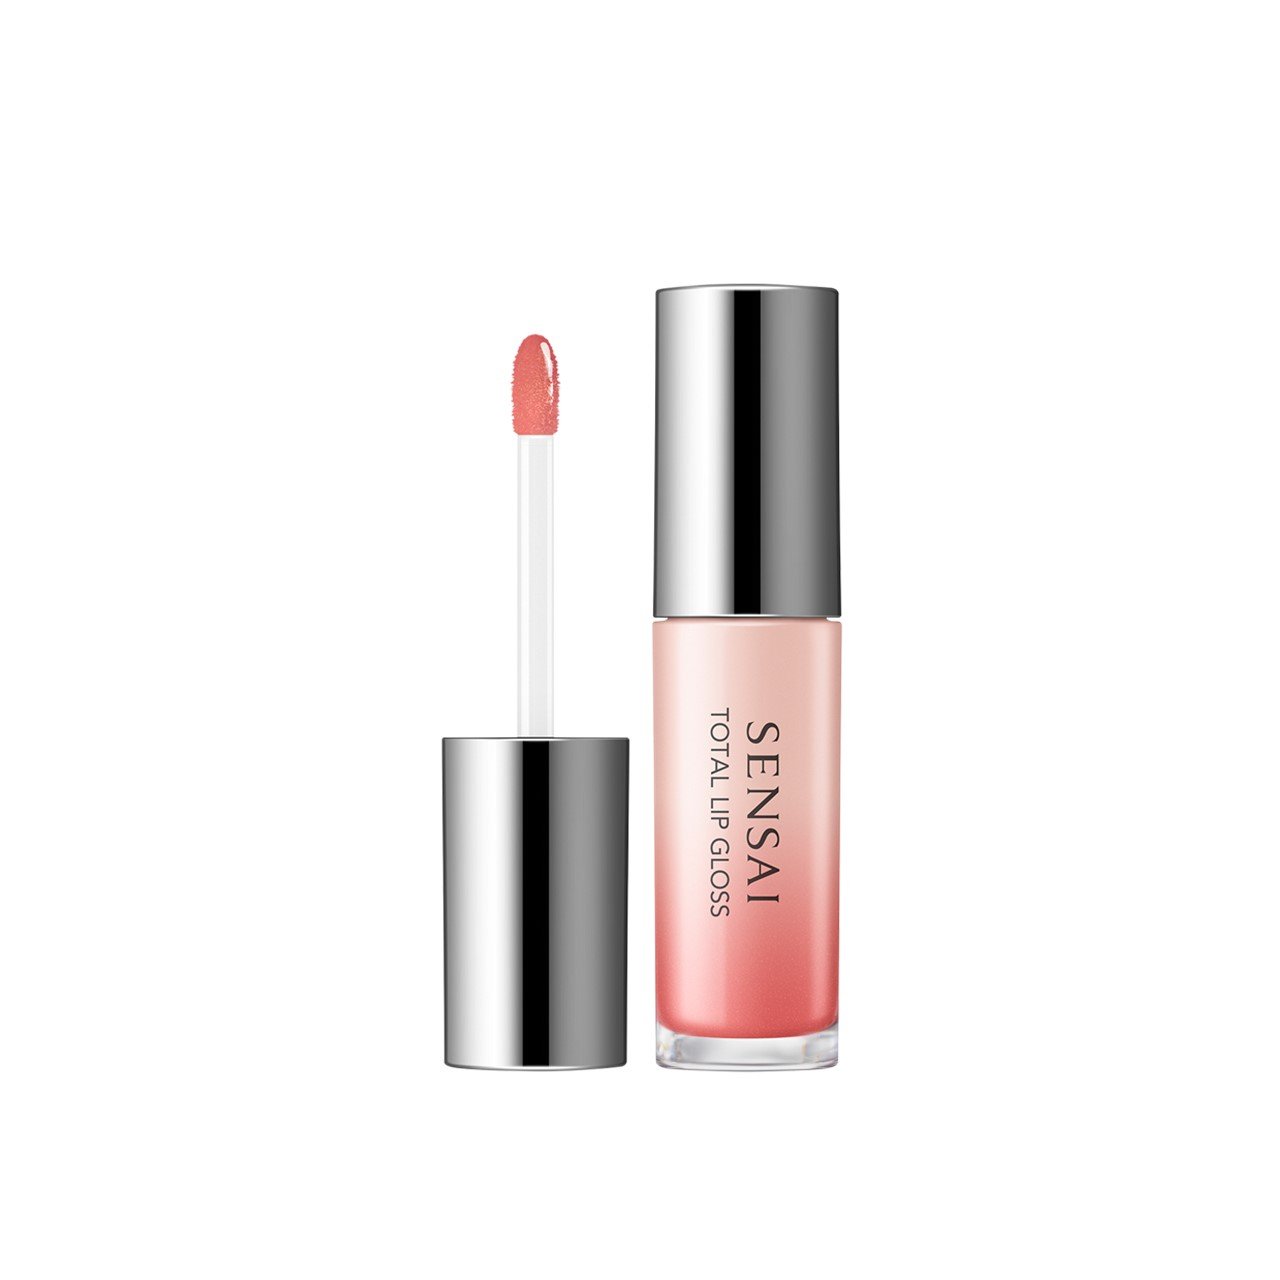 SENSAI Total Lip Gloss In Colours